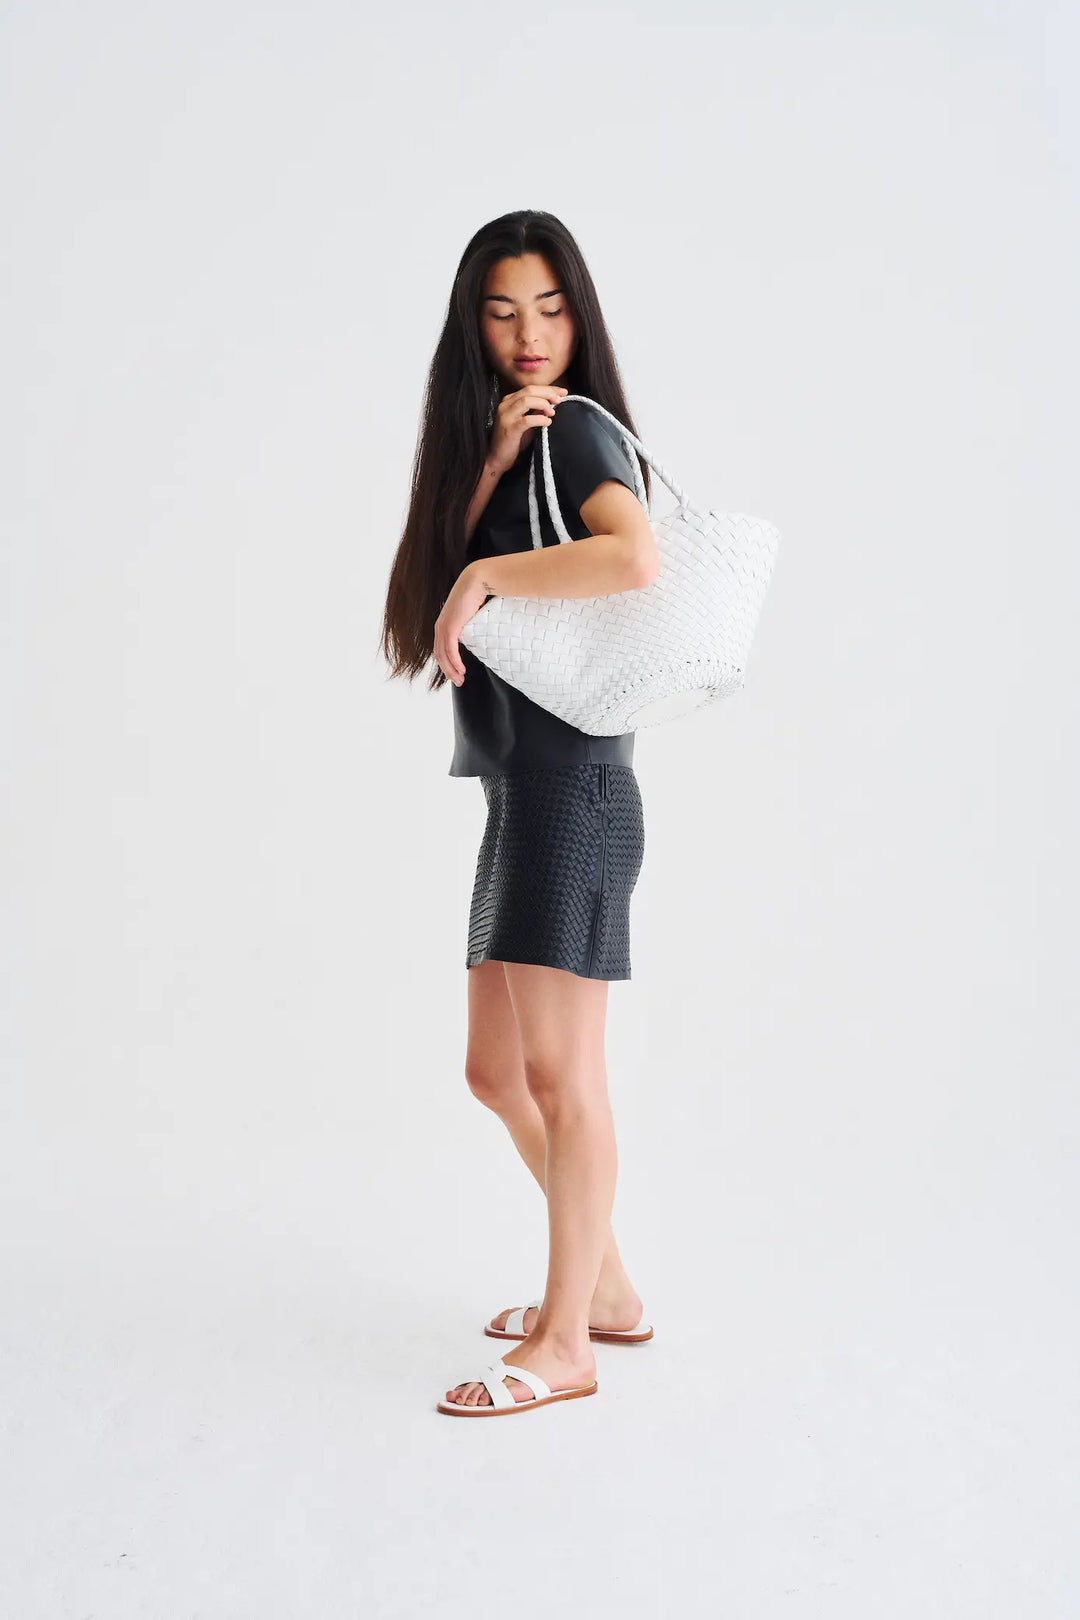 Dragon Diffusion - Egola White - Woven Leather Bag Handmade